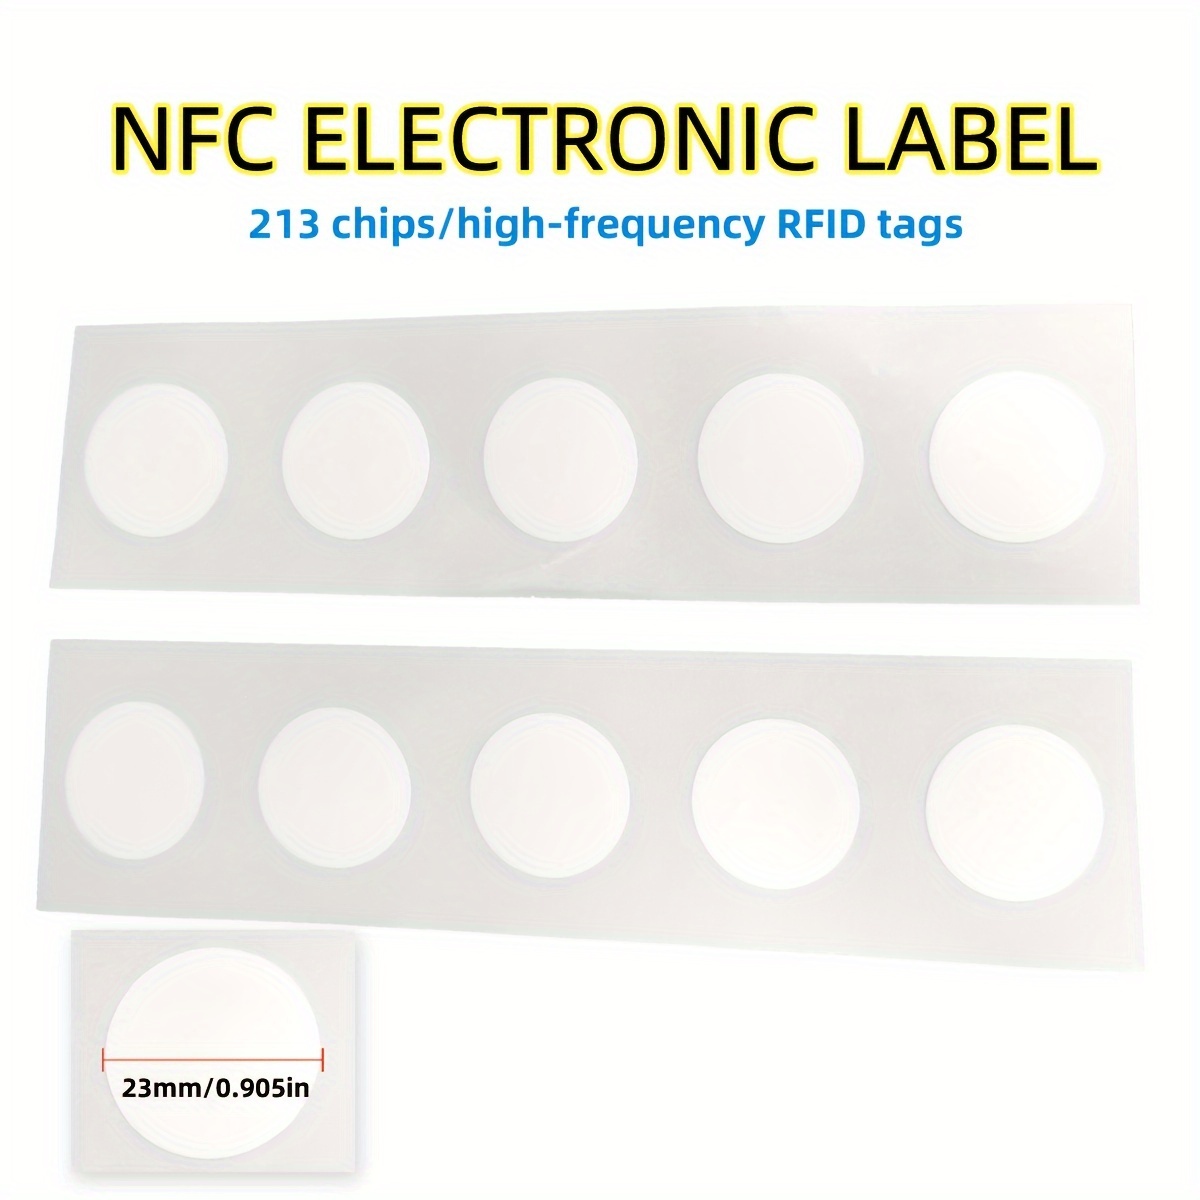 5Pcs NFC Stickers NFC213 Tag Sticker 144 Bytes Blank Round NFC